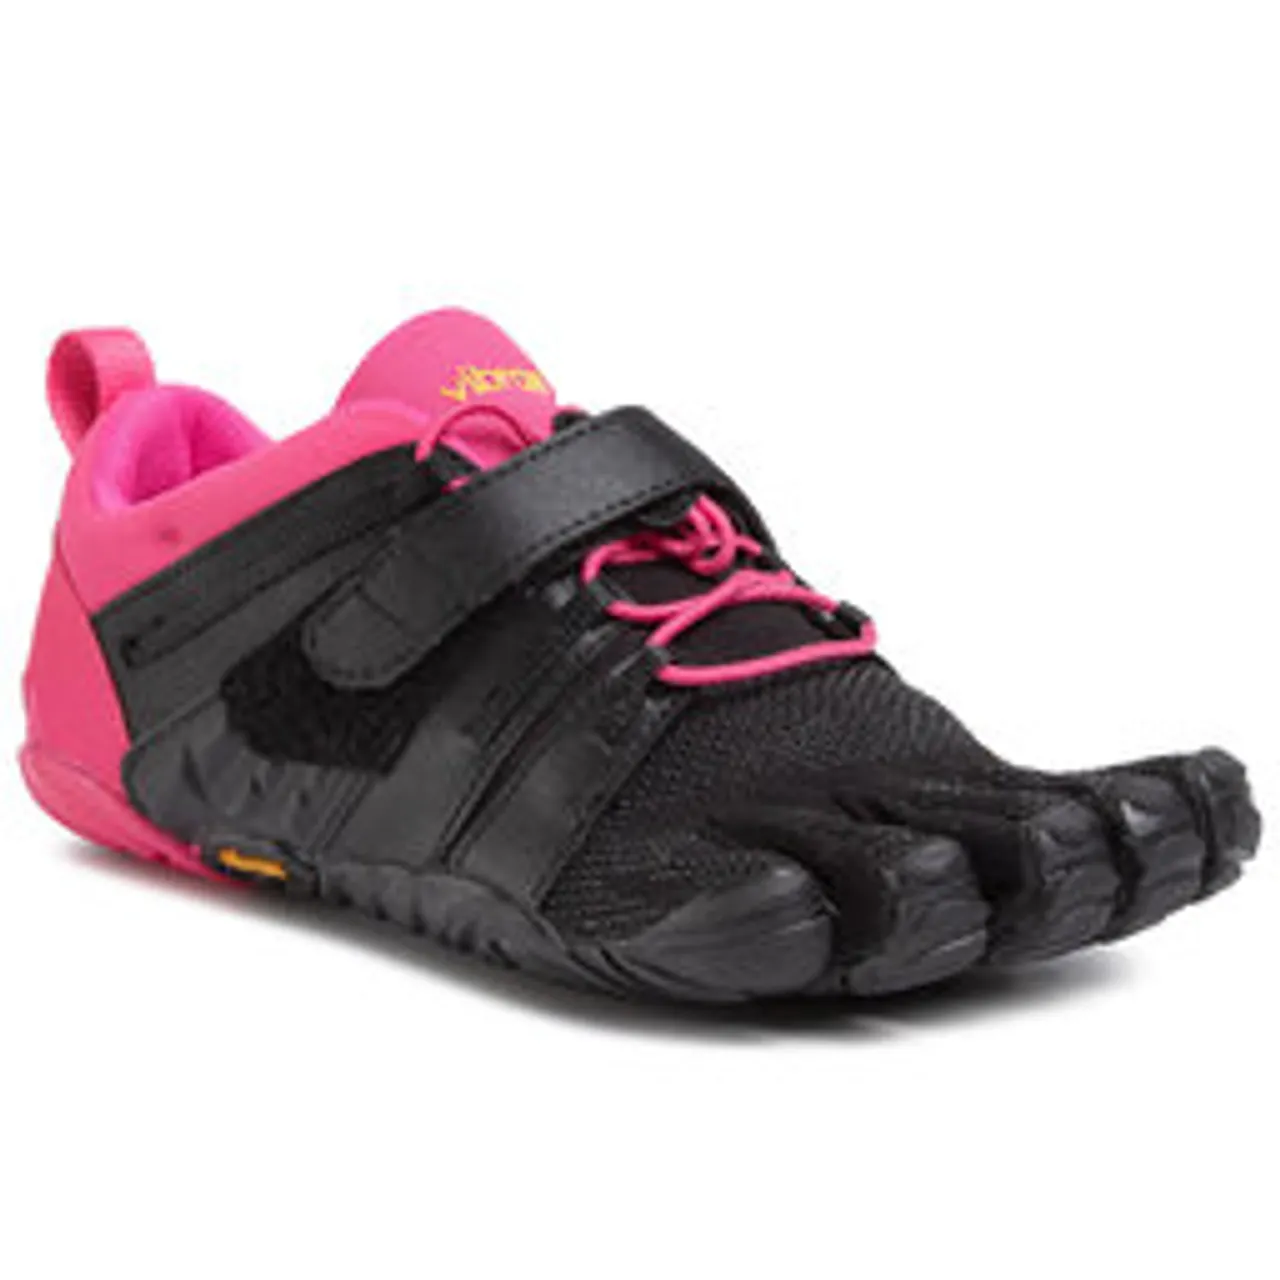 Schuhe Vibram Fivefingers V-Train 2.0 20W7703 Black/Pink